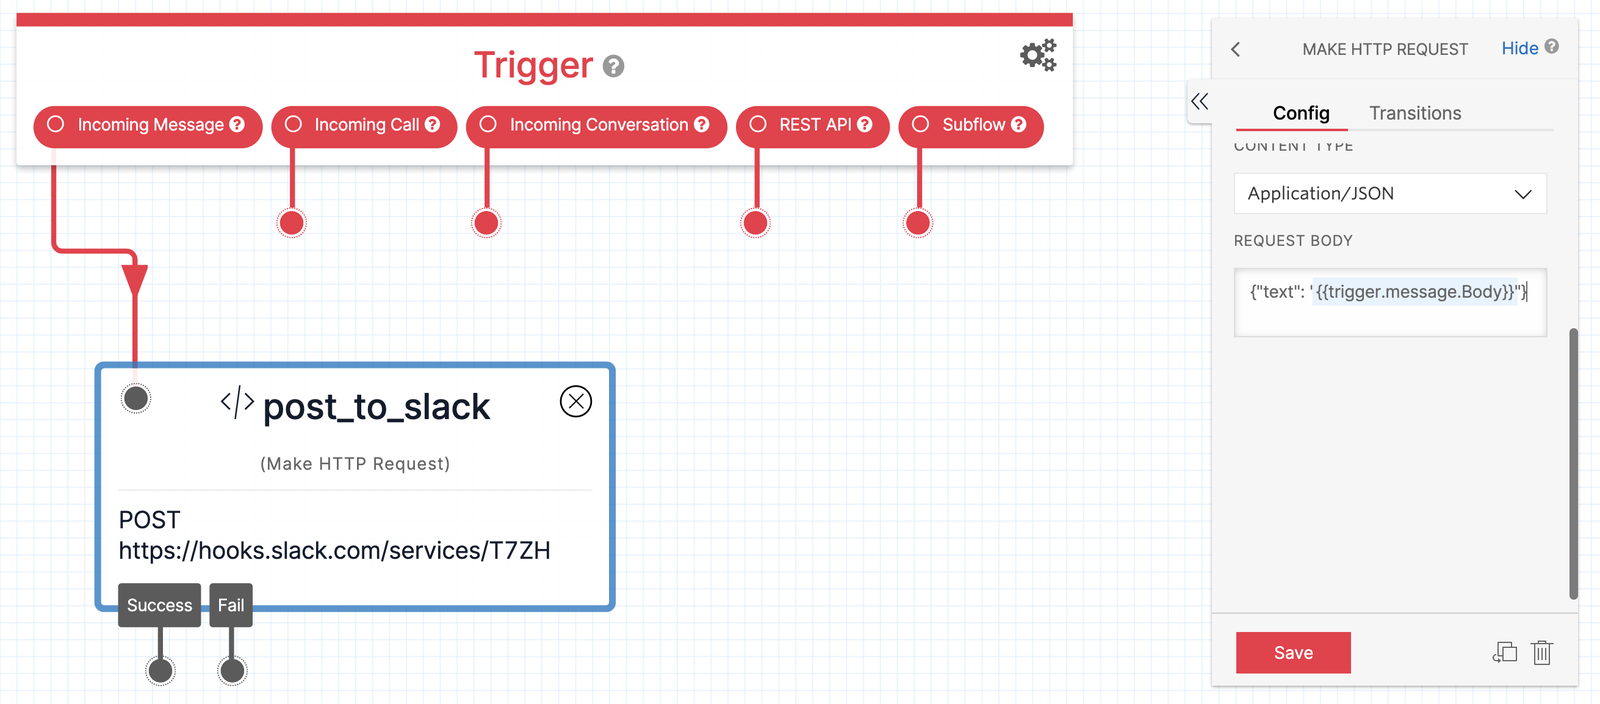 Twilio Studio Tutorial Post to Slack HTTP Request Widget shown with Request Body Configuration.